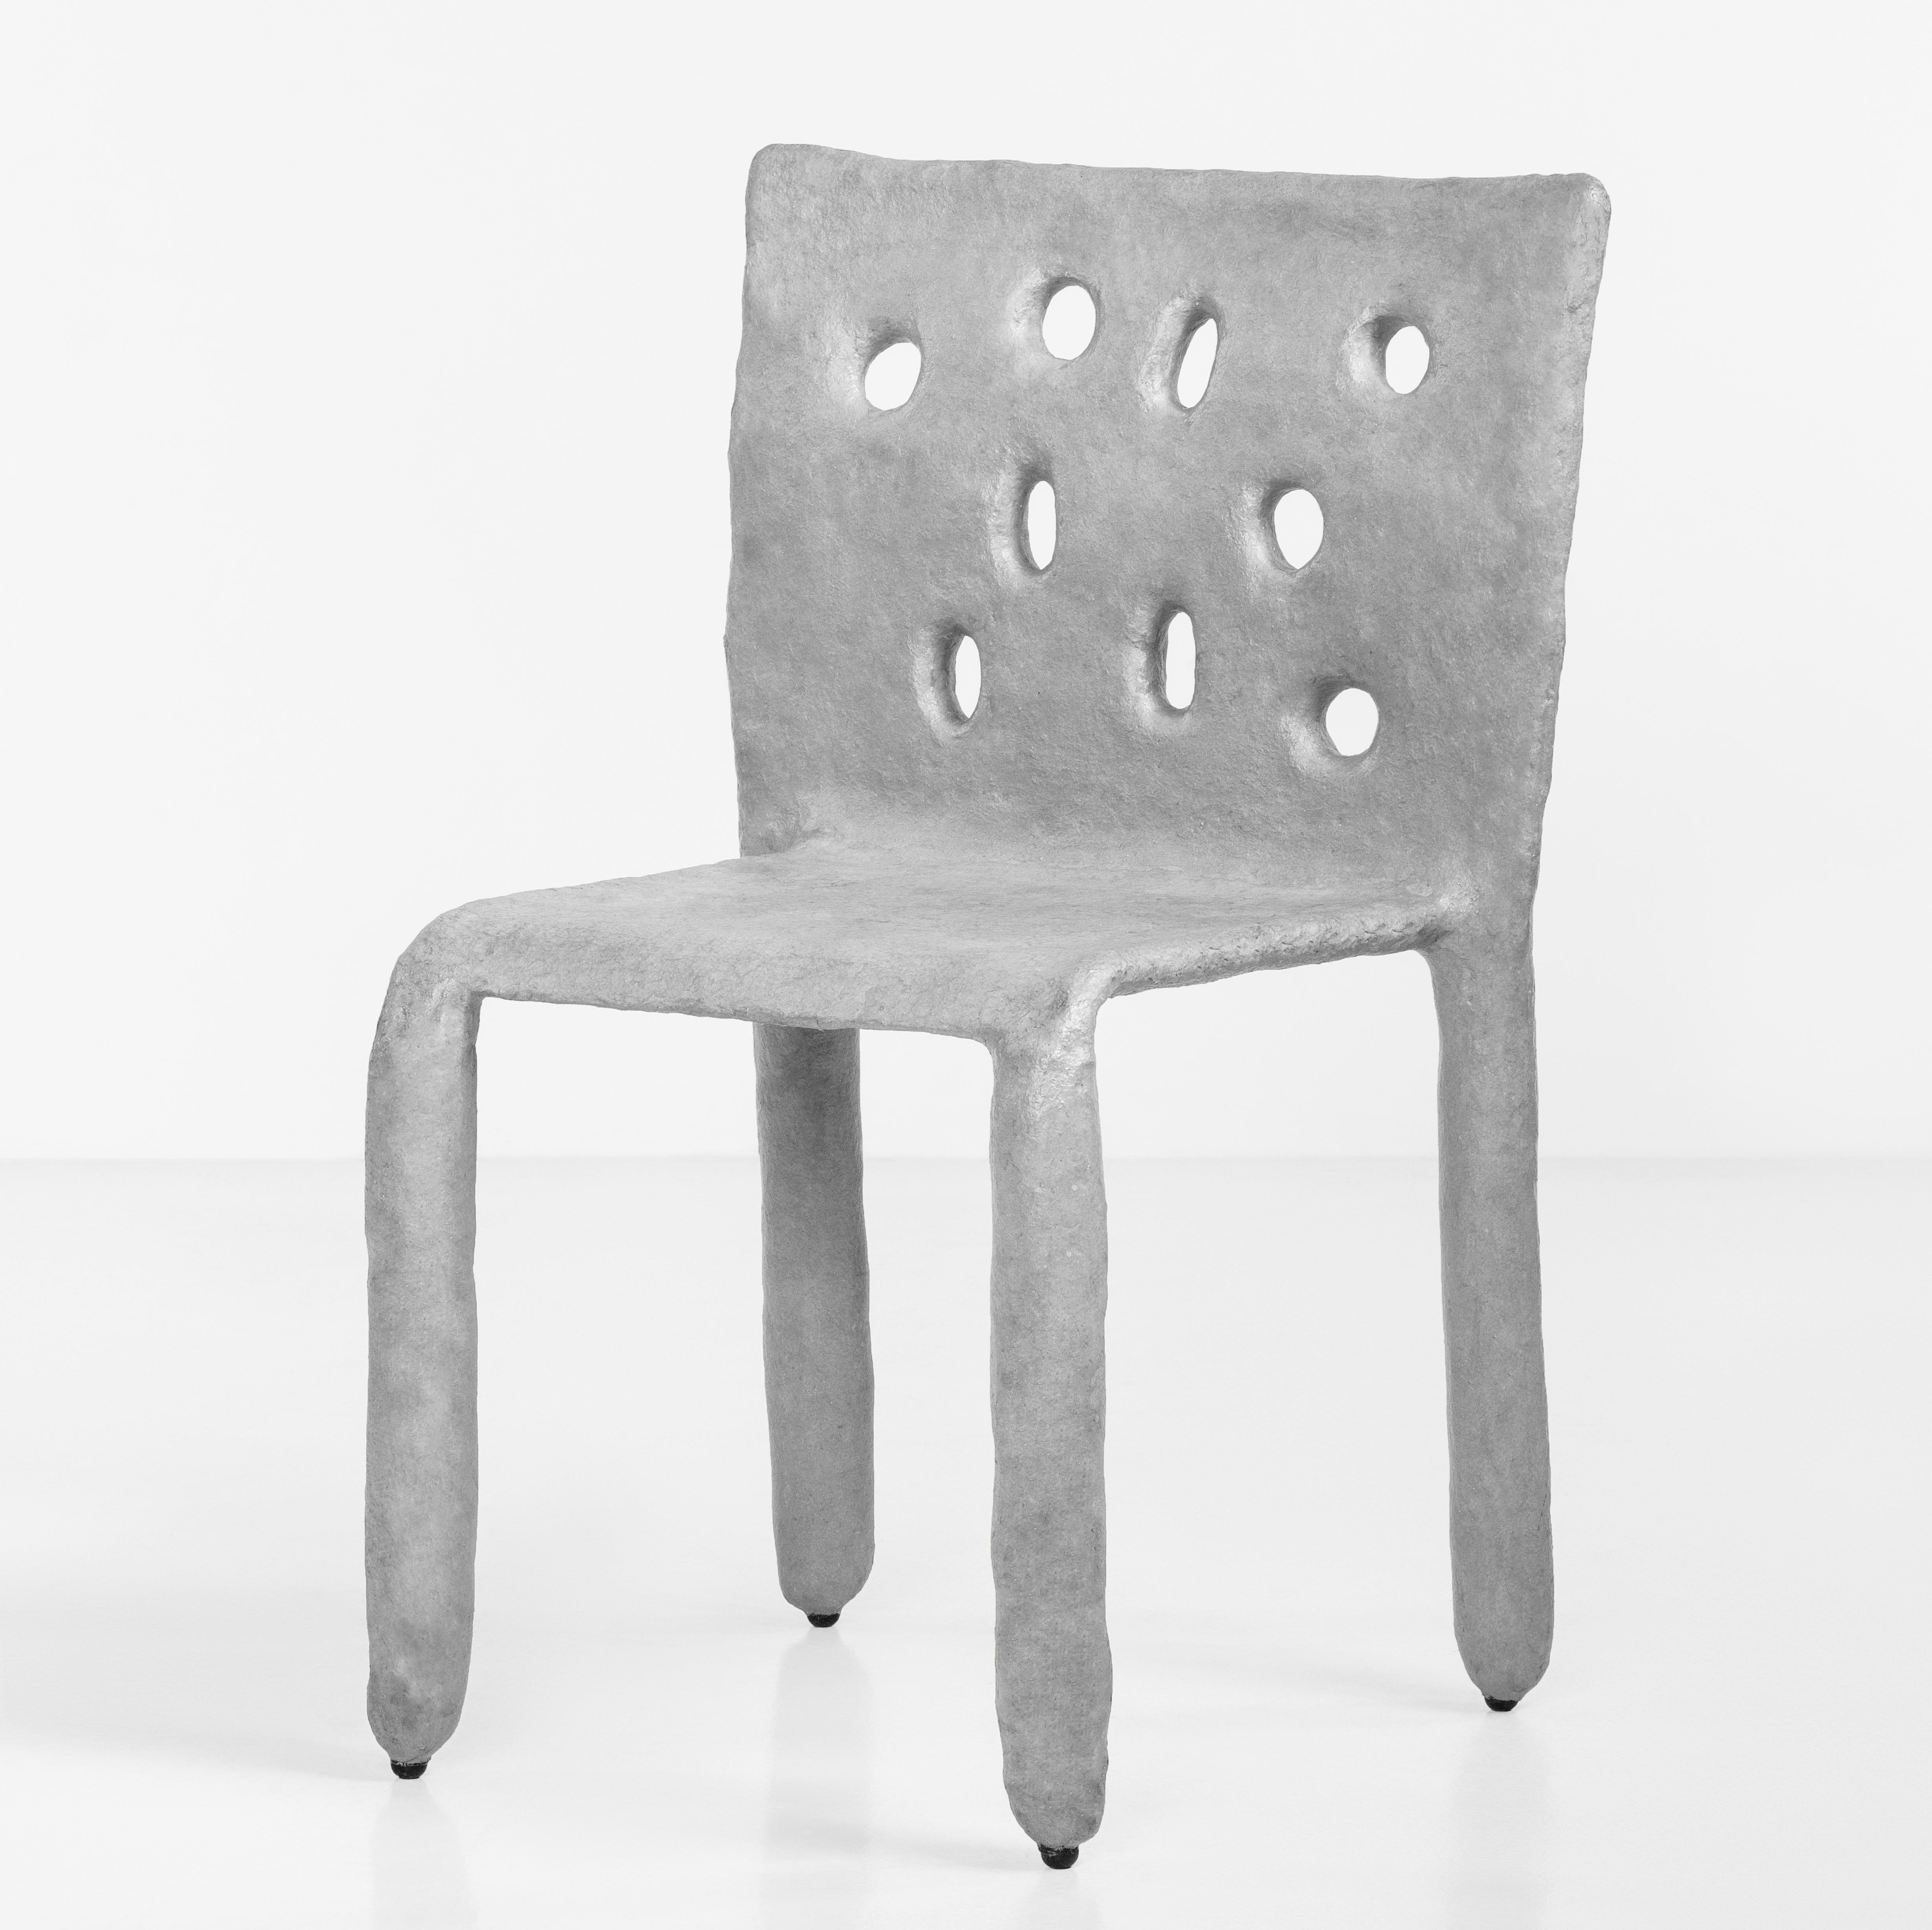 Steel Orange Sculpted Contemporary Chair by FAINA